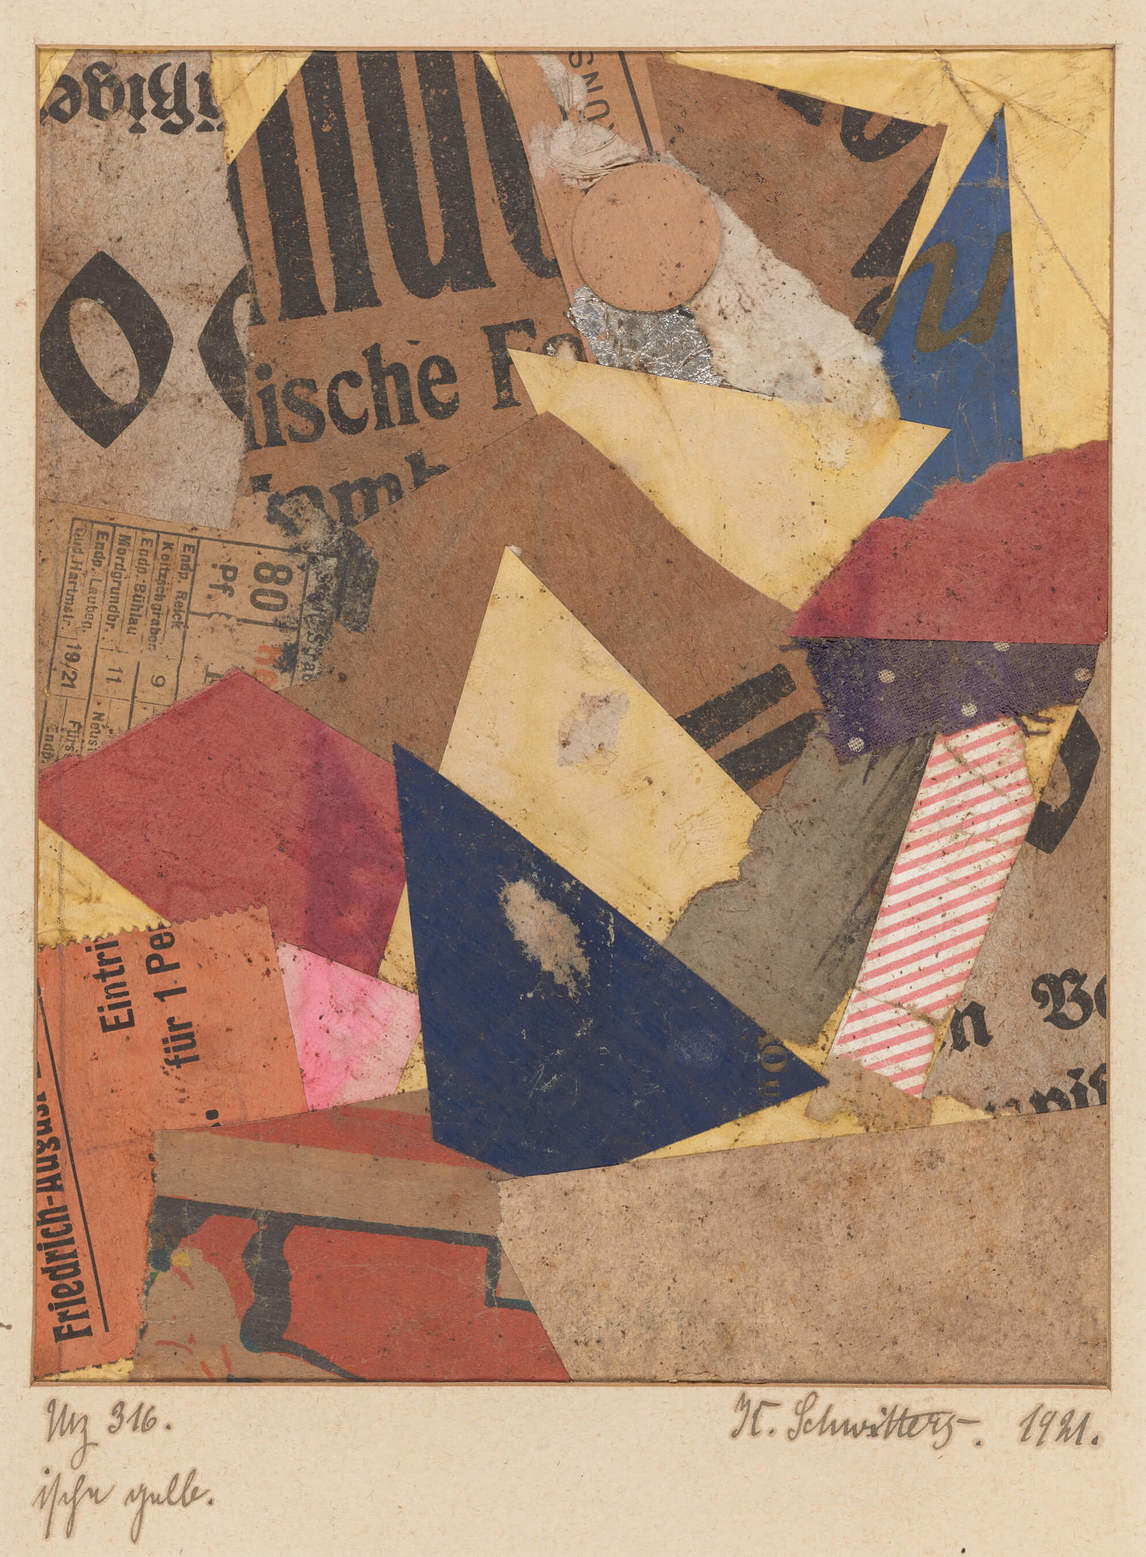 Art Canada Institute, Greg Curnoe, Mz 316 ische gelb (Mz 316 ische Yellow), 1921, by Kurt Schwitters